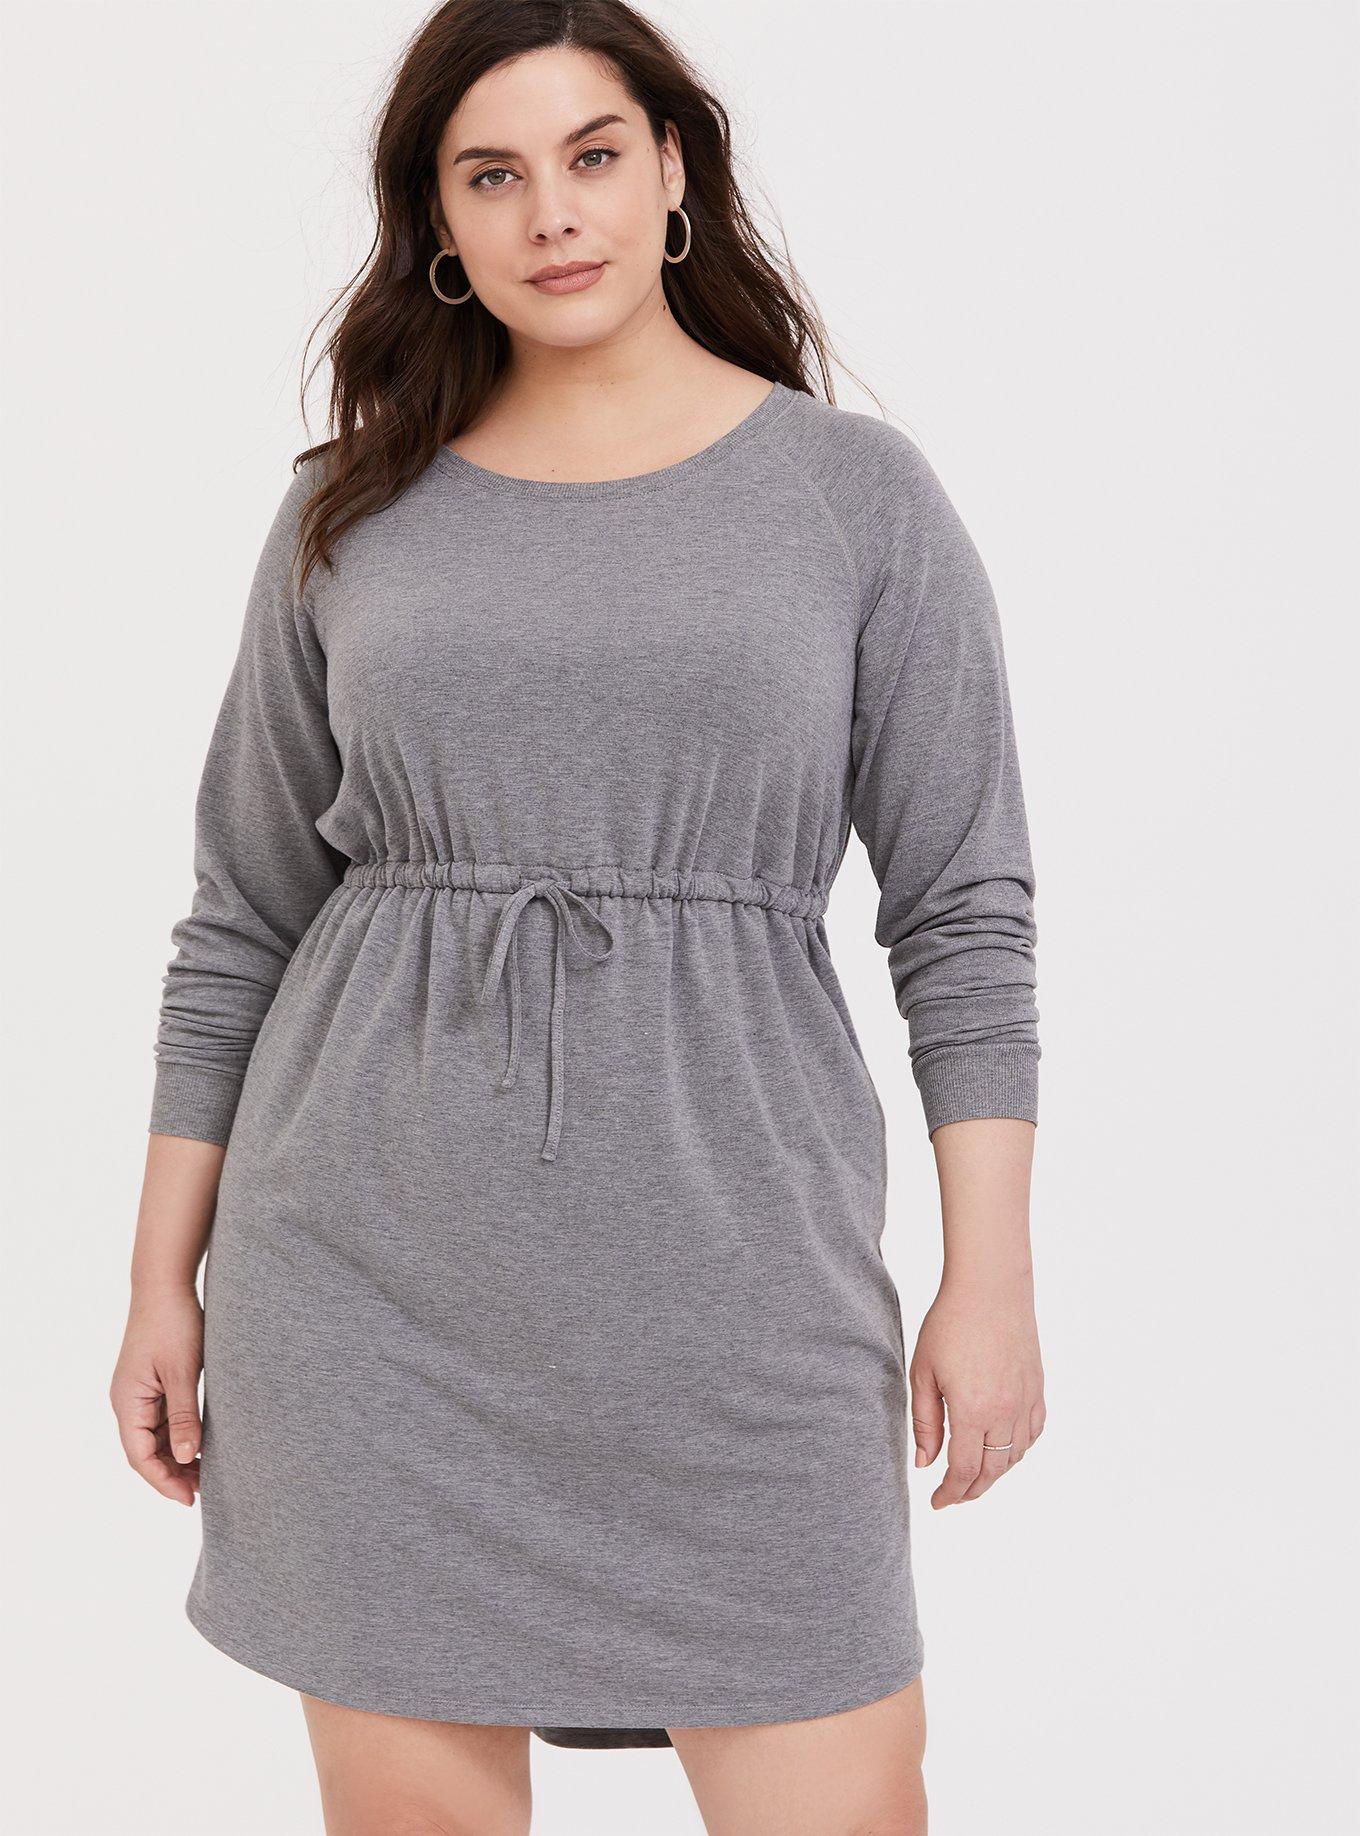 Plus Size - Light Grey Terry Drawstring Dress - Torrid